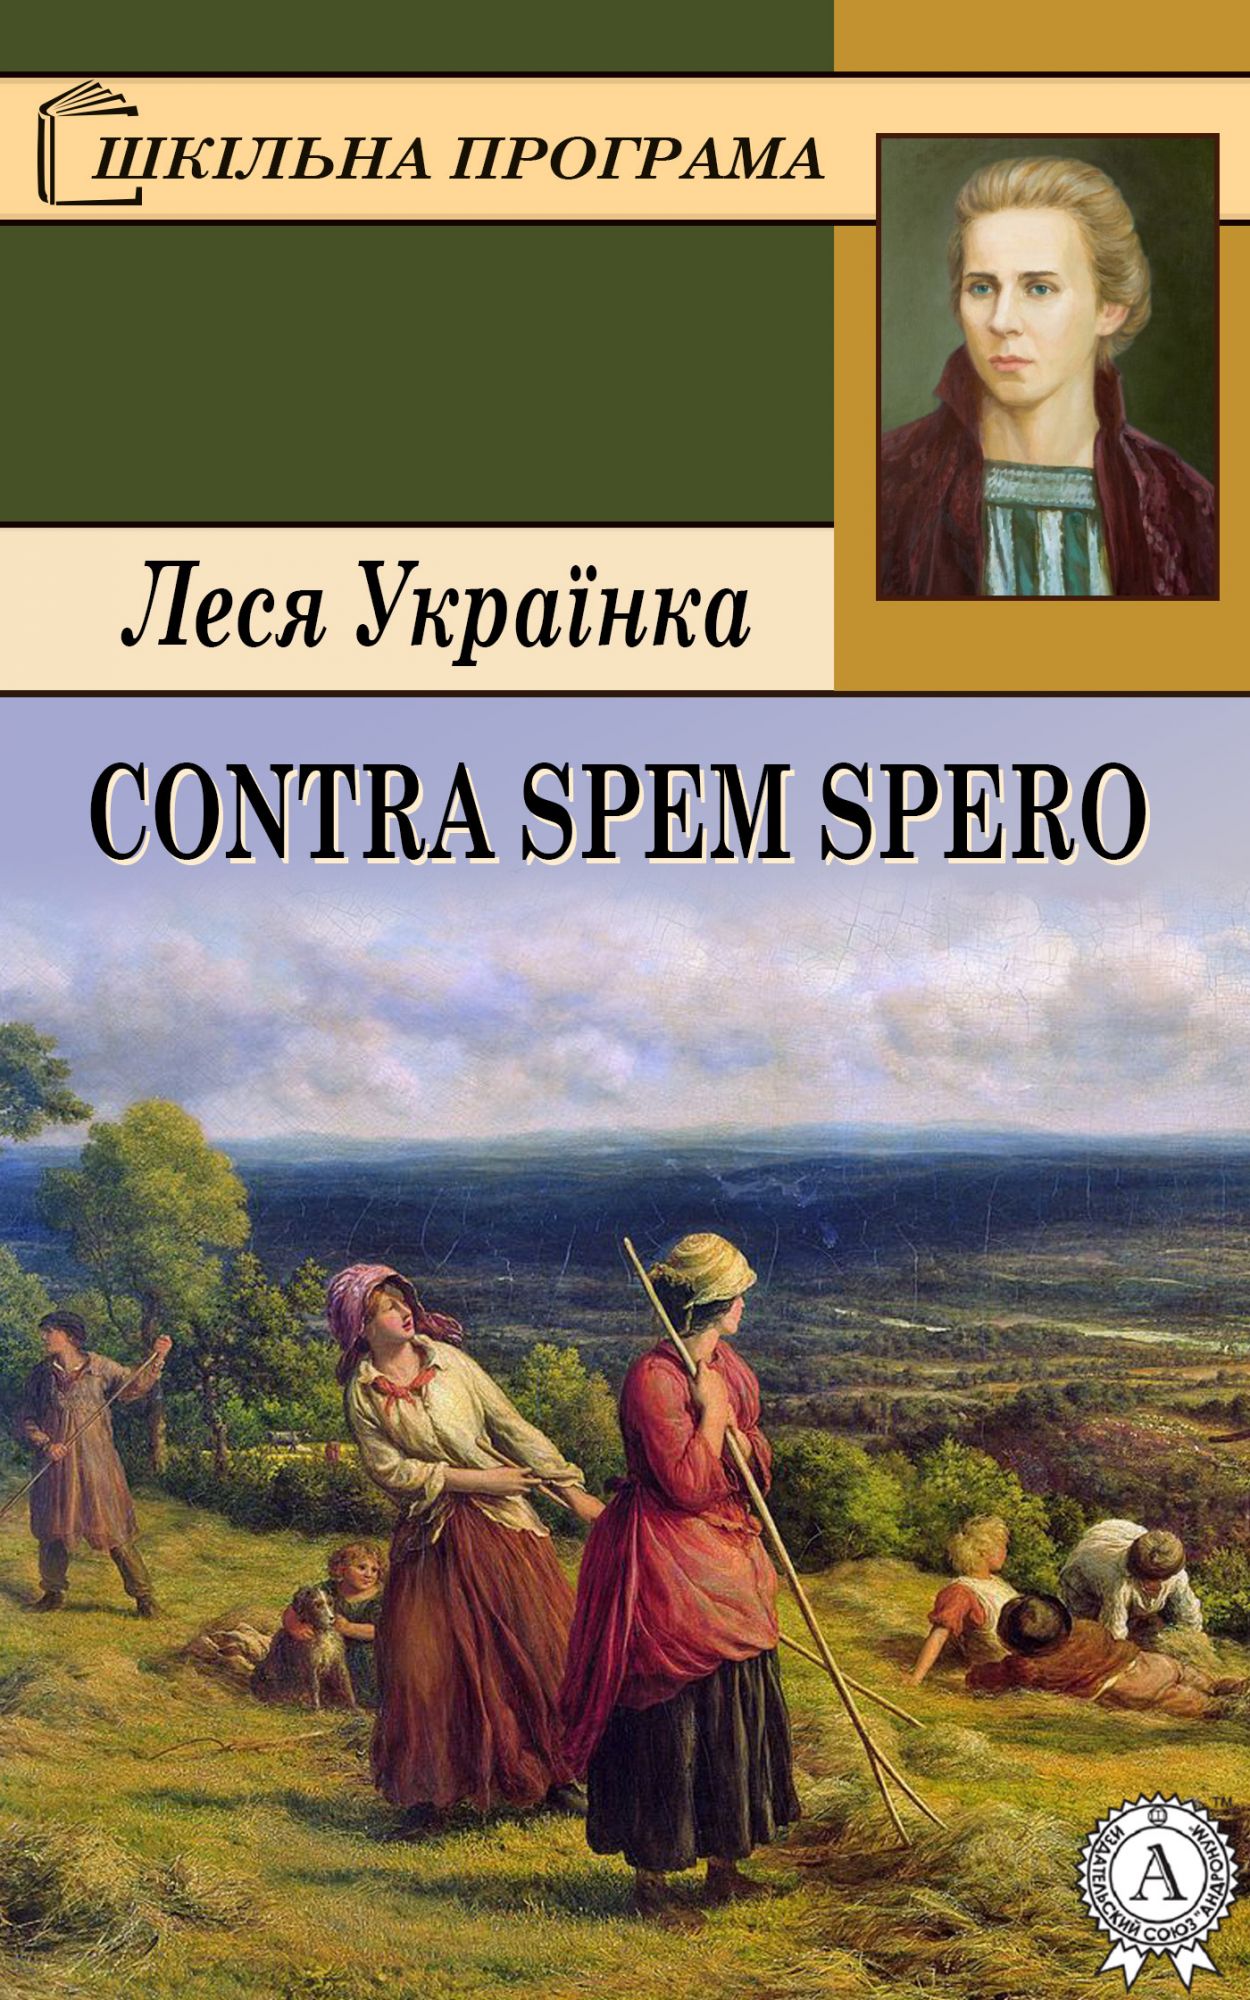 Contra spem spero - Леся Українка - Слухати Книги Українською Онлайн Безкоштовно 📘 Knigi-Audio.com/uk/